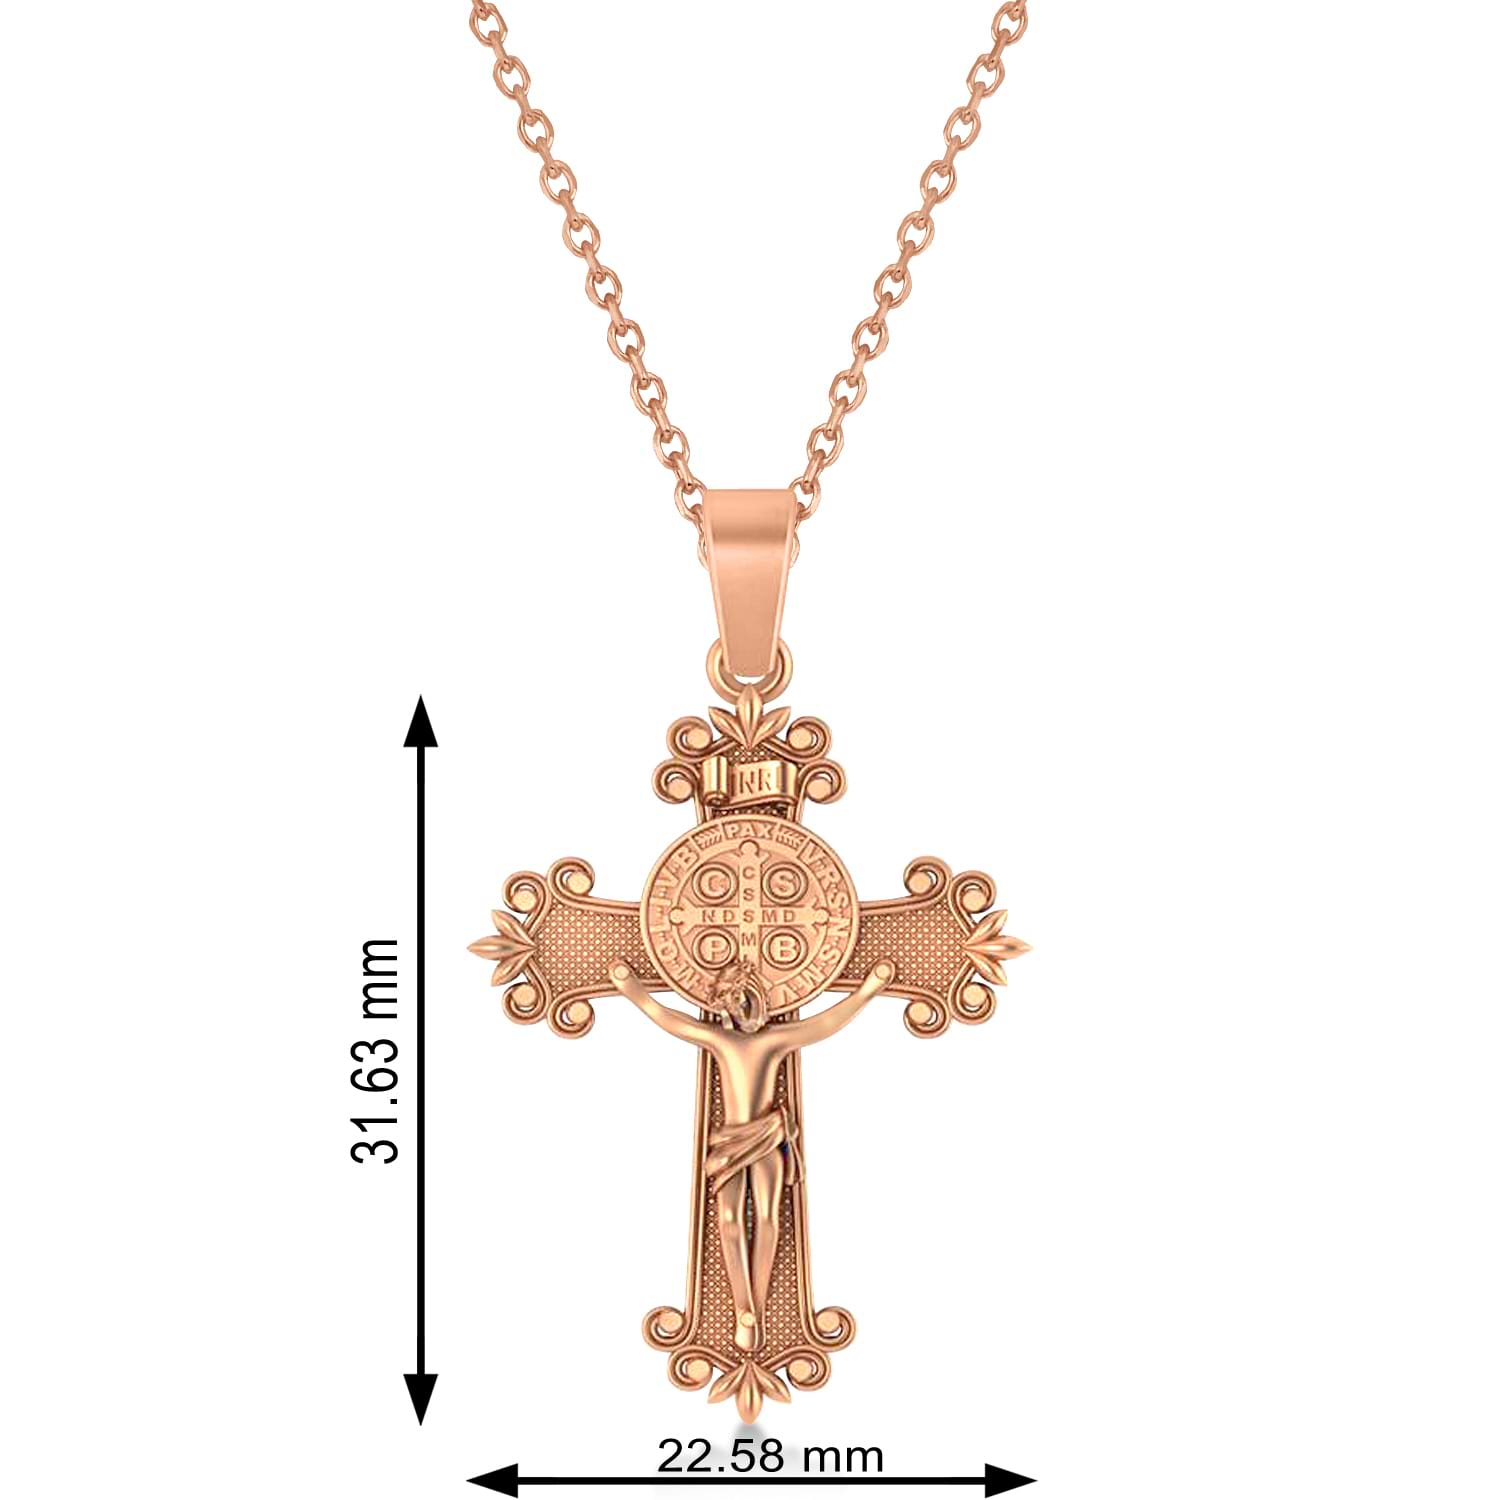 Cross Benedict Crucifix Pendant Necklace 14k Rose Gold